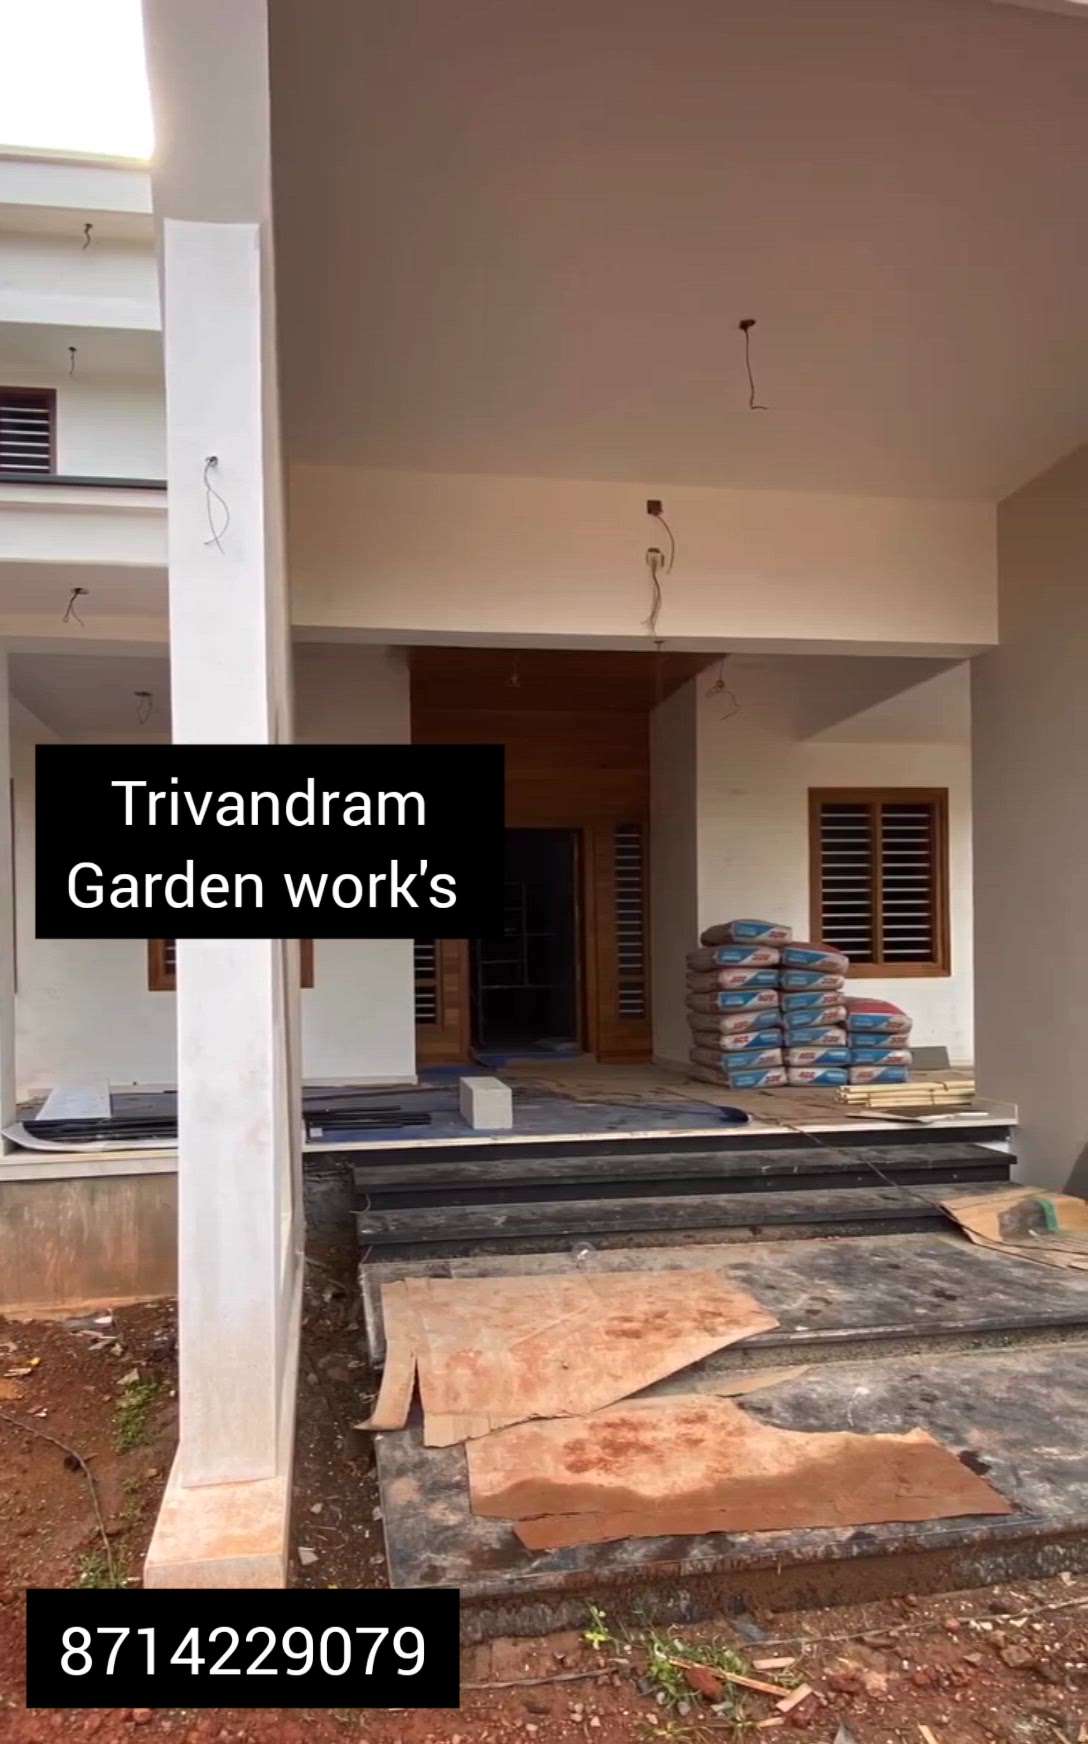 trivandram Landscape
87142290 79
 #LandscapeGarden
#trivandrumhomes